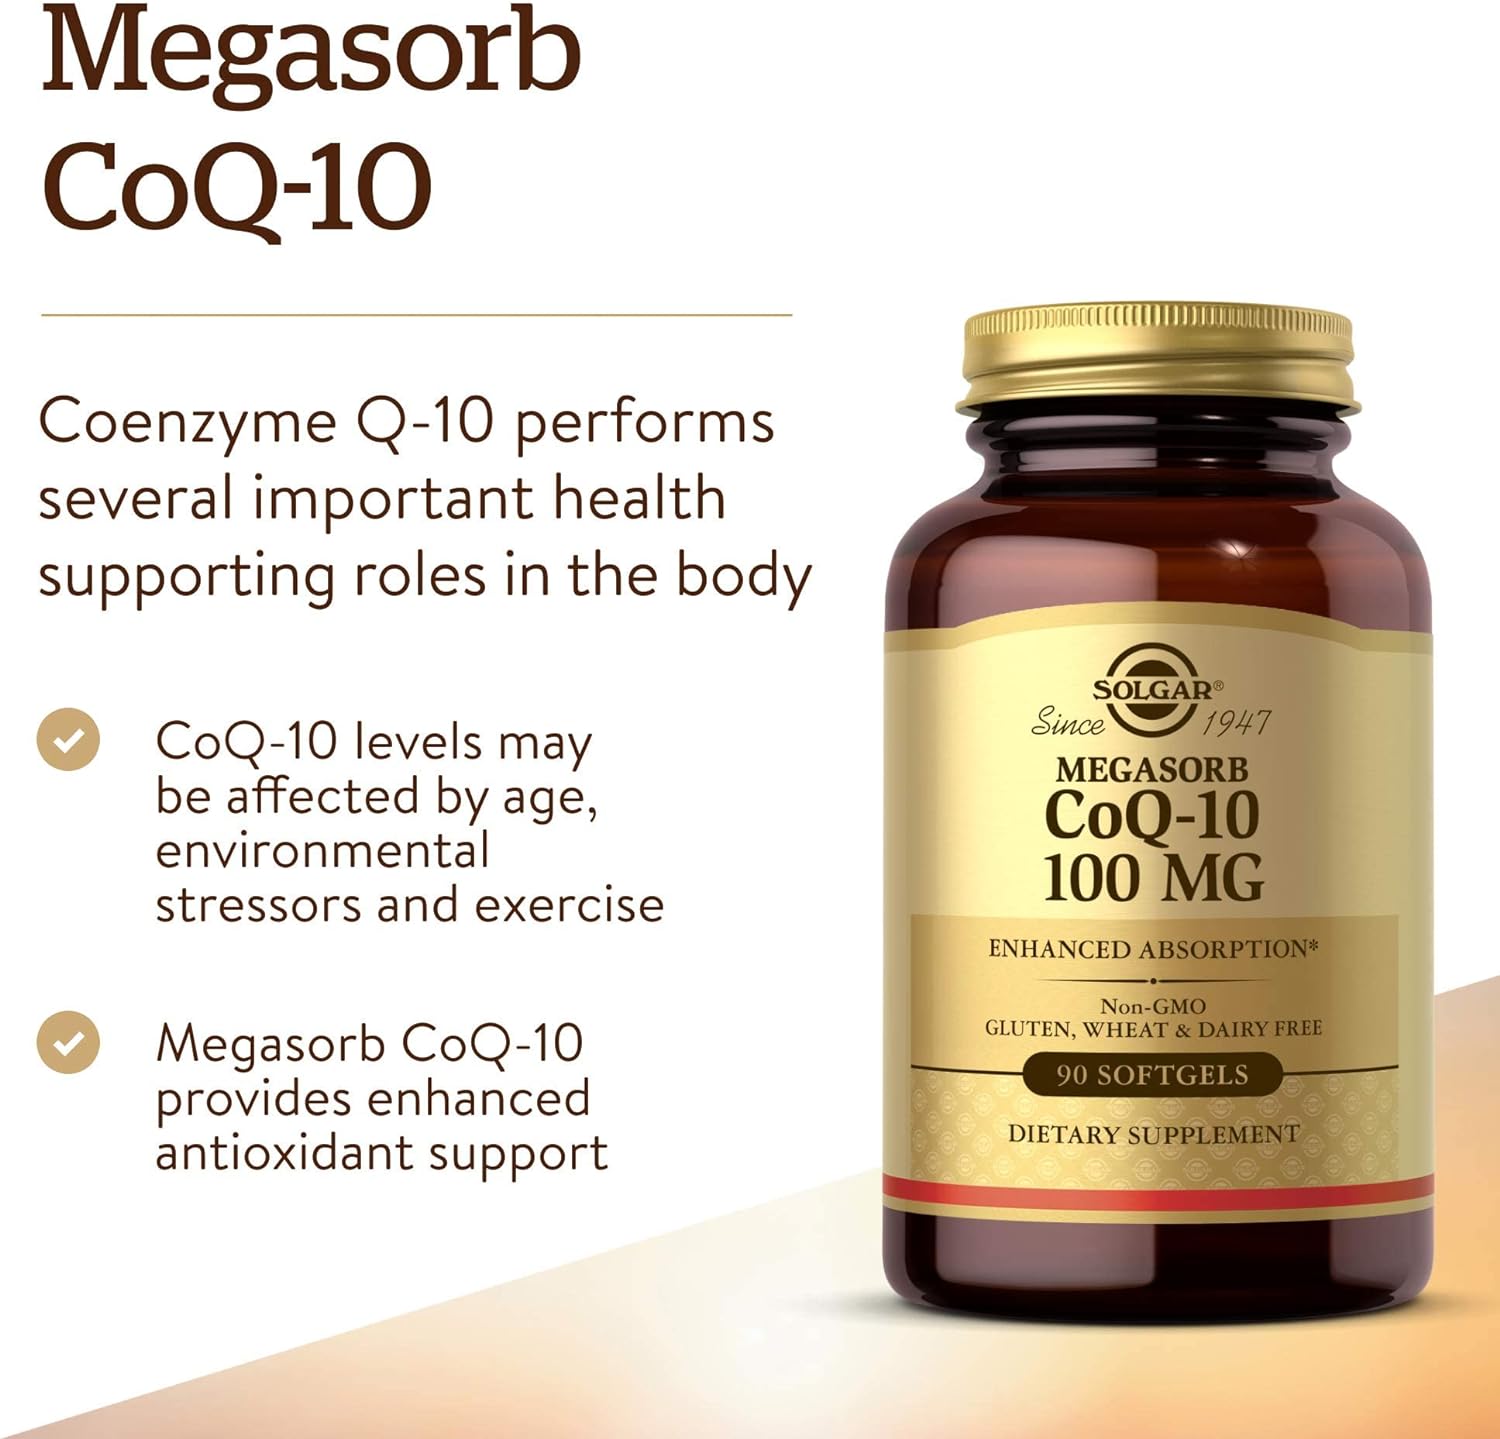 Solgar Megasorb CoQ-10 100 mg, 90 Softgels - Supports Heart Function &